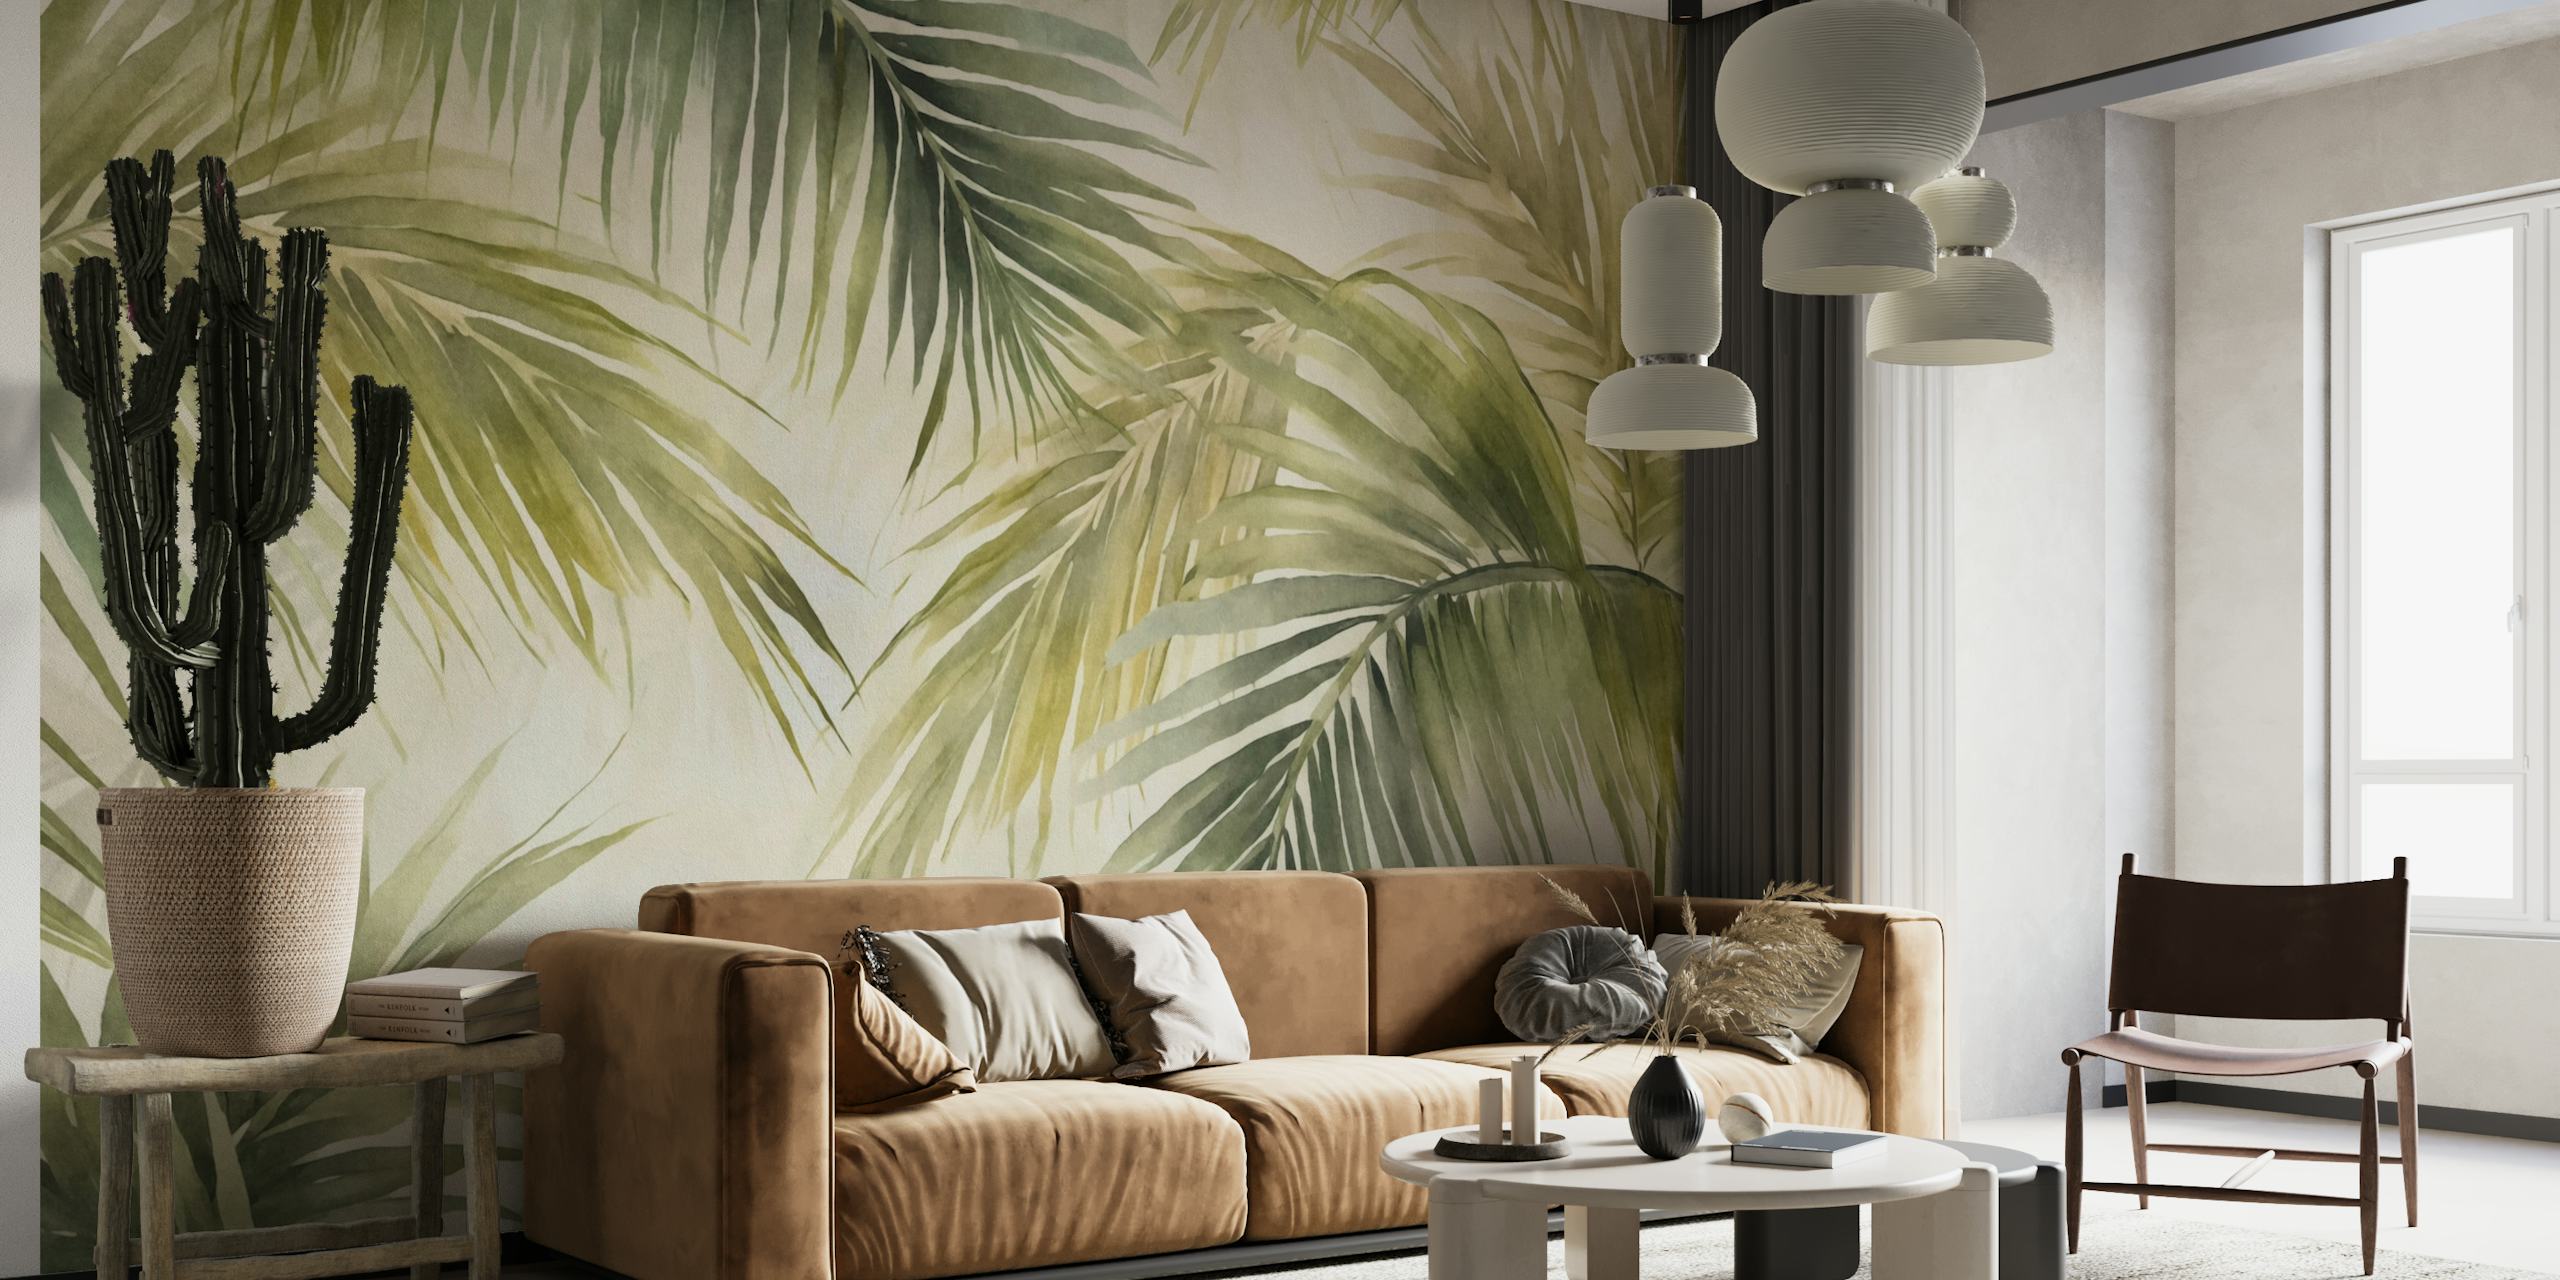 Fototapete Tropical Island Palm Leaves Aquarellgrün mit üppigem Grün